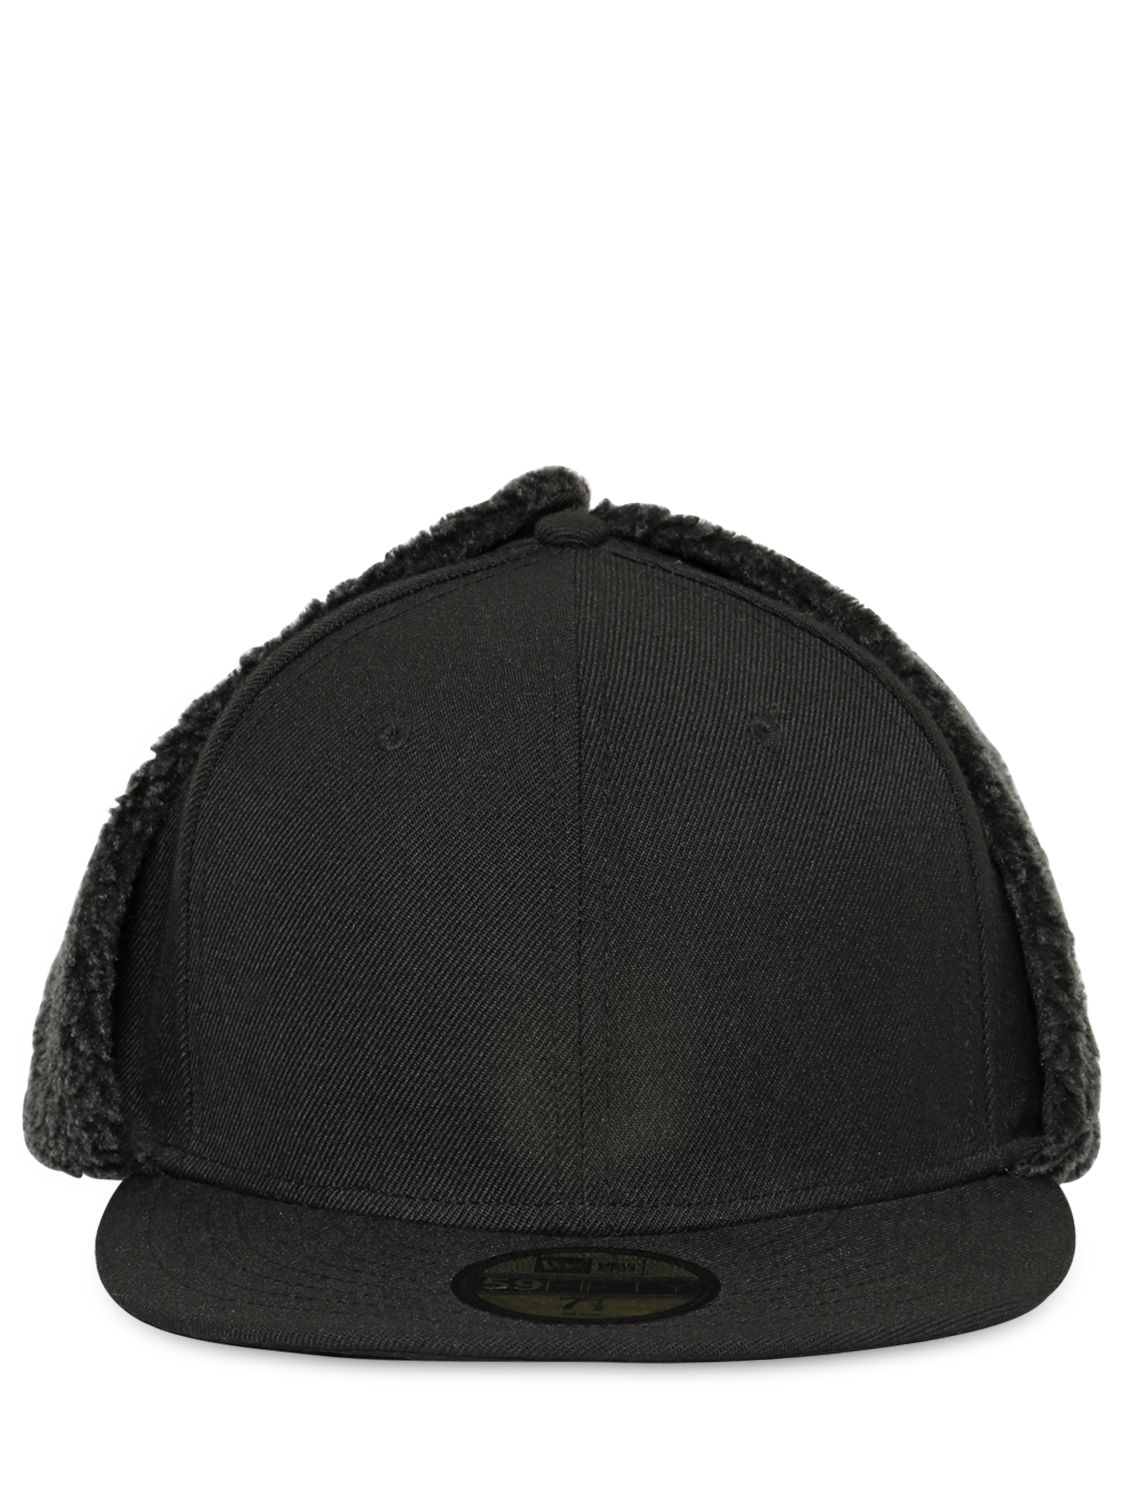 Yohji Yamamoto Wool Baseball Hat With Ear Flaps in Black for Men